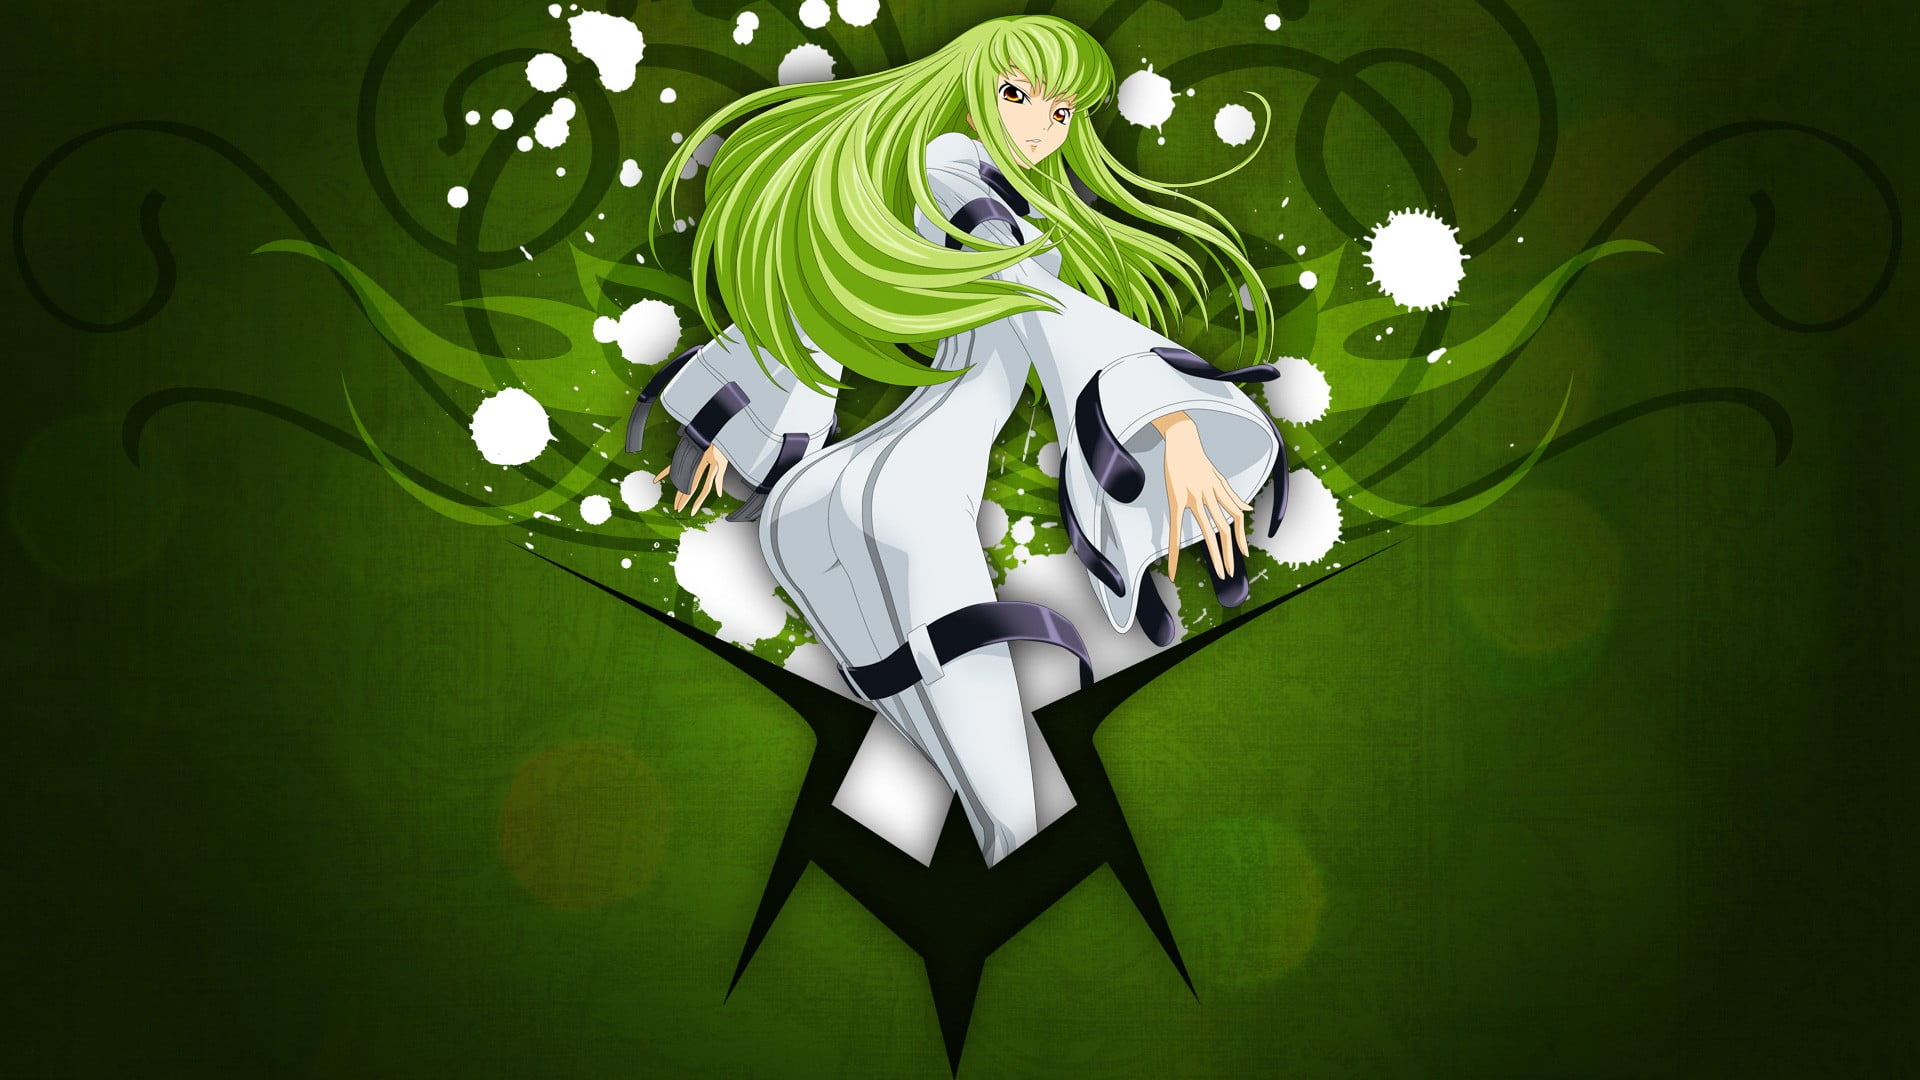 Green Haired Female Anime Character Illustration C C Code Geass